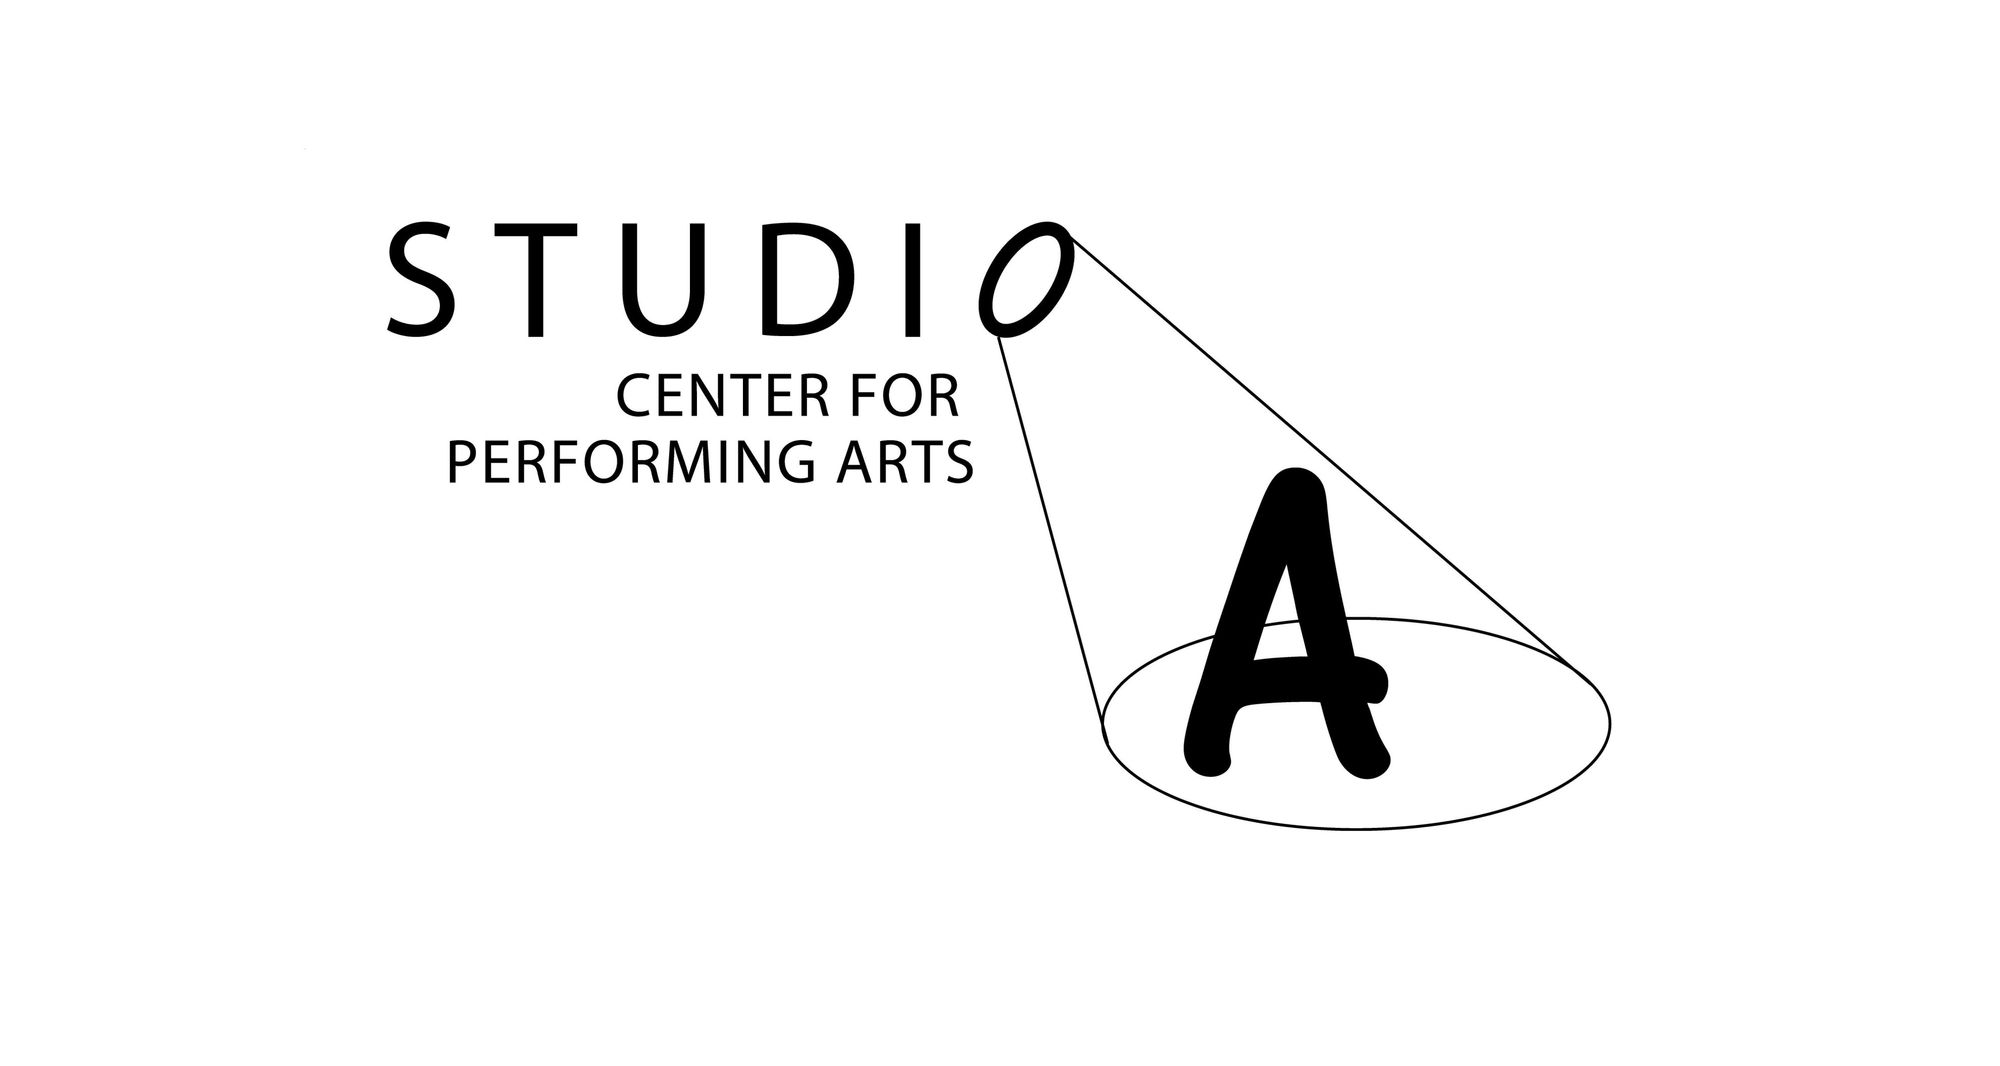 Studio A Center for Performing Arts - Amy Lingeman